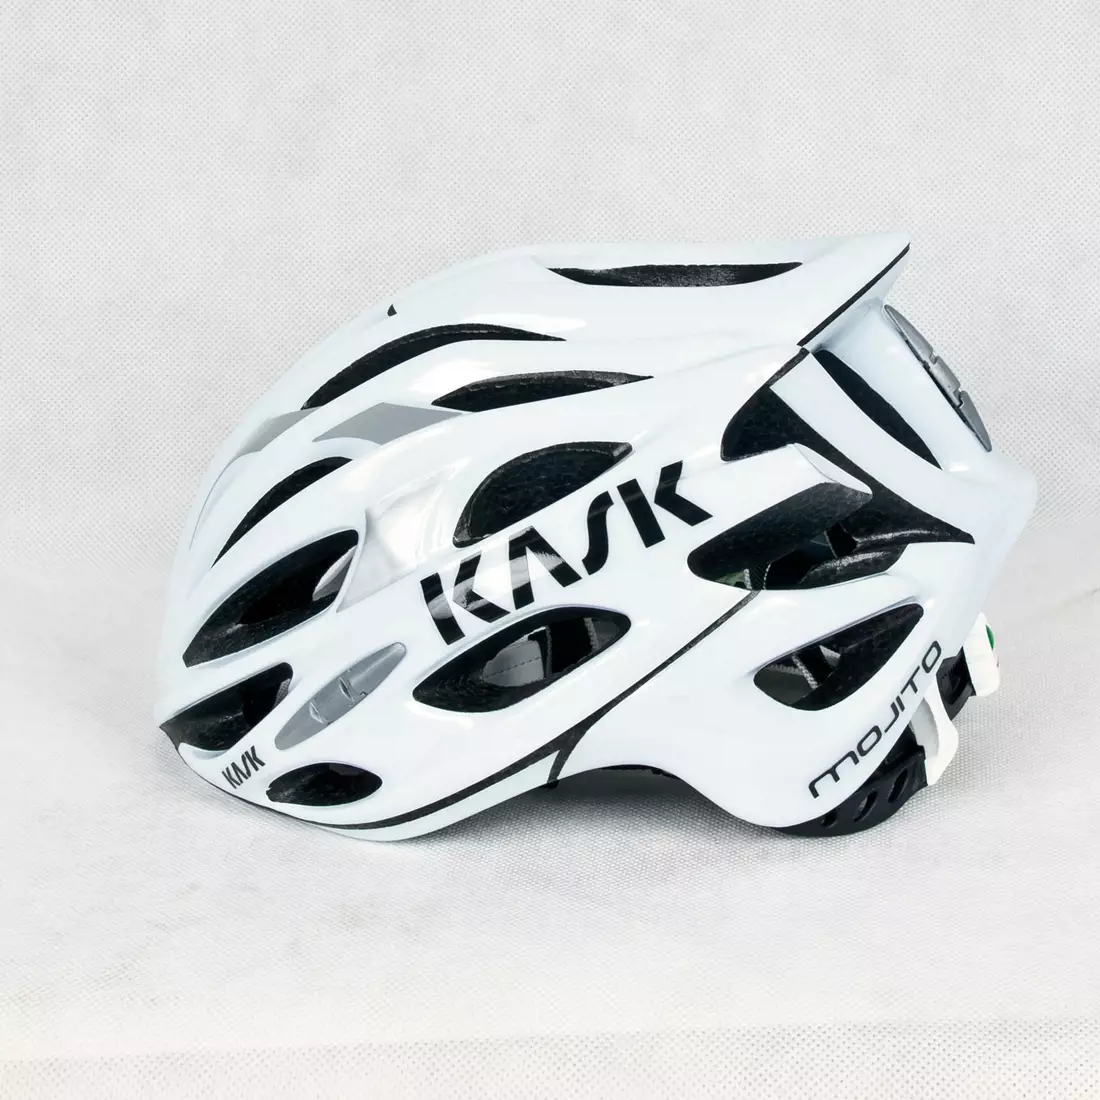 MOJITO HELMET - bicycle helmet CHE00044.203 color: white